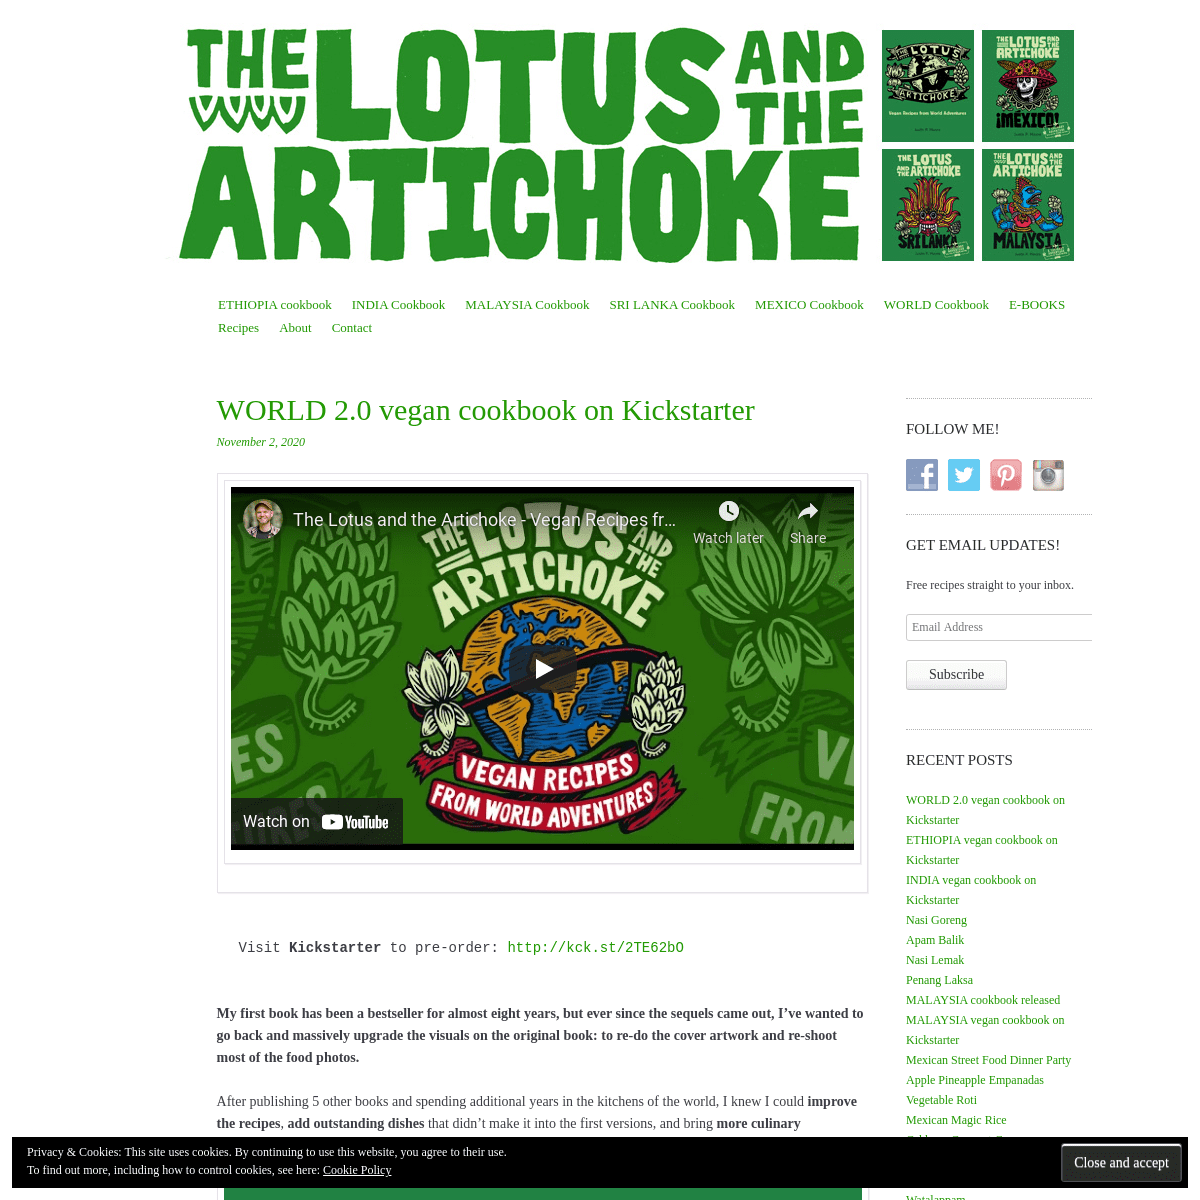 A complete backup of https://lotusartichoke.com